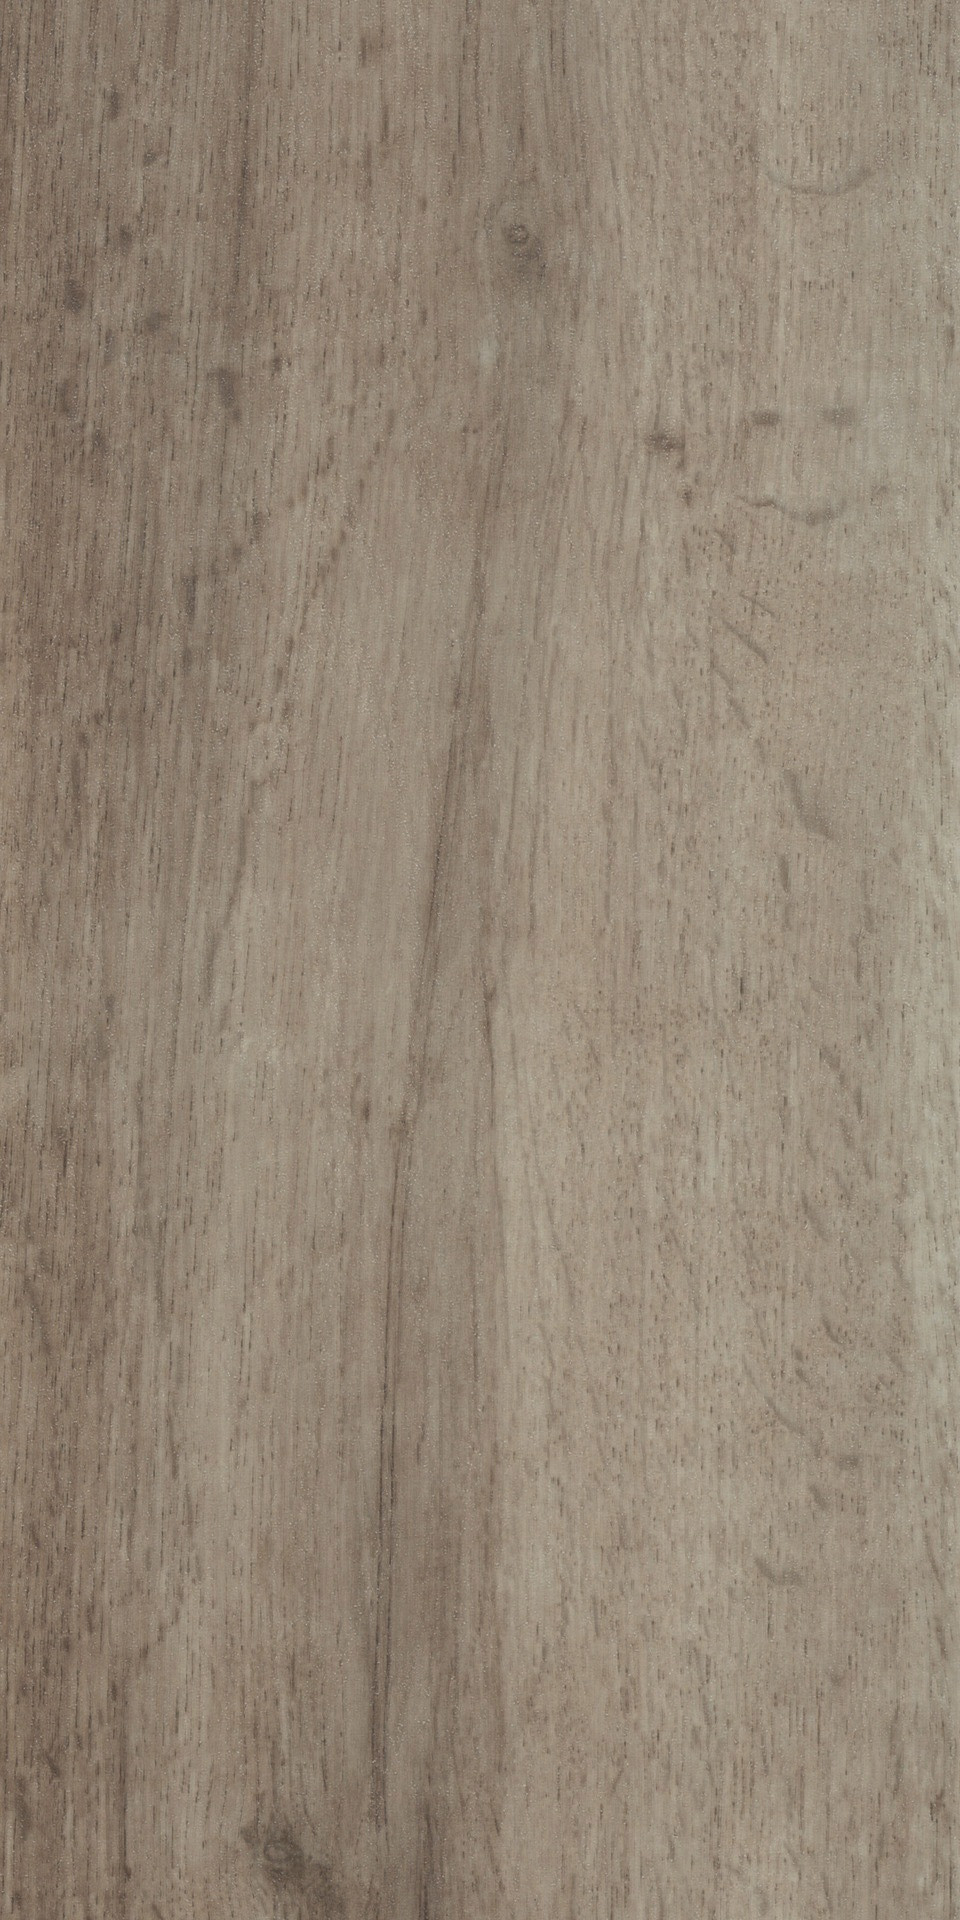 oak hardwood flooring types of 26 unique grey hardwood floors photos flooring design ideas pertaining to grey hardwood floors best of forbo allura flex 0 55 grey autumn oak selbstliegender vinylboden images